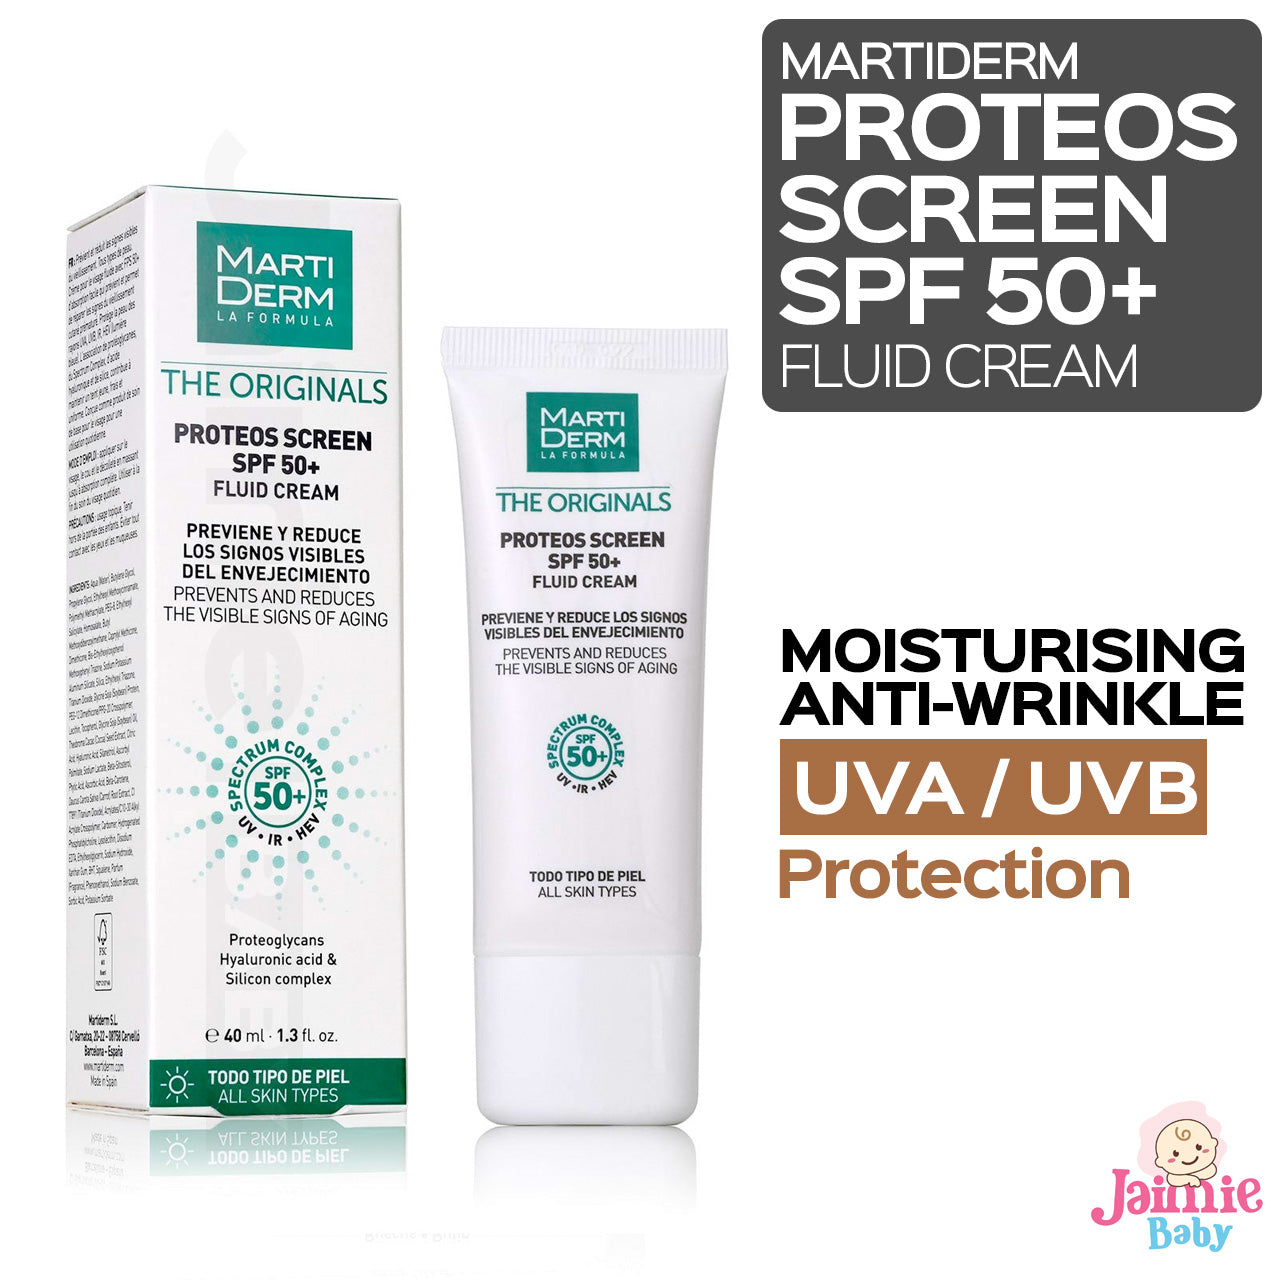 Martiderm Proteos Screen SPF 50+ Fluid Cream moisturiser anti wrinkle sunscreen sunblock 40ml